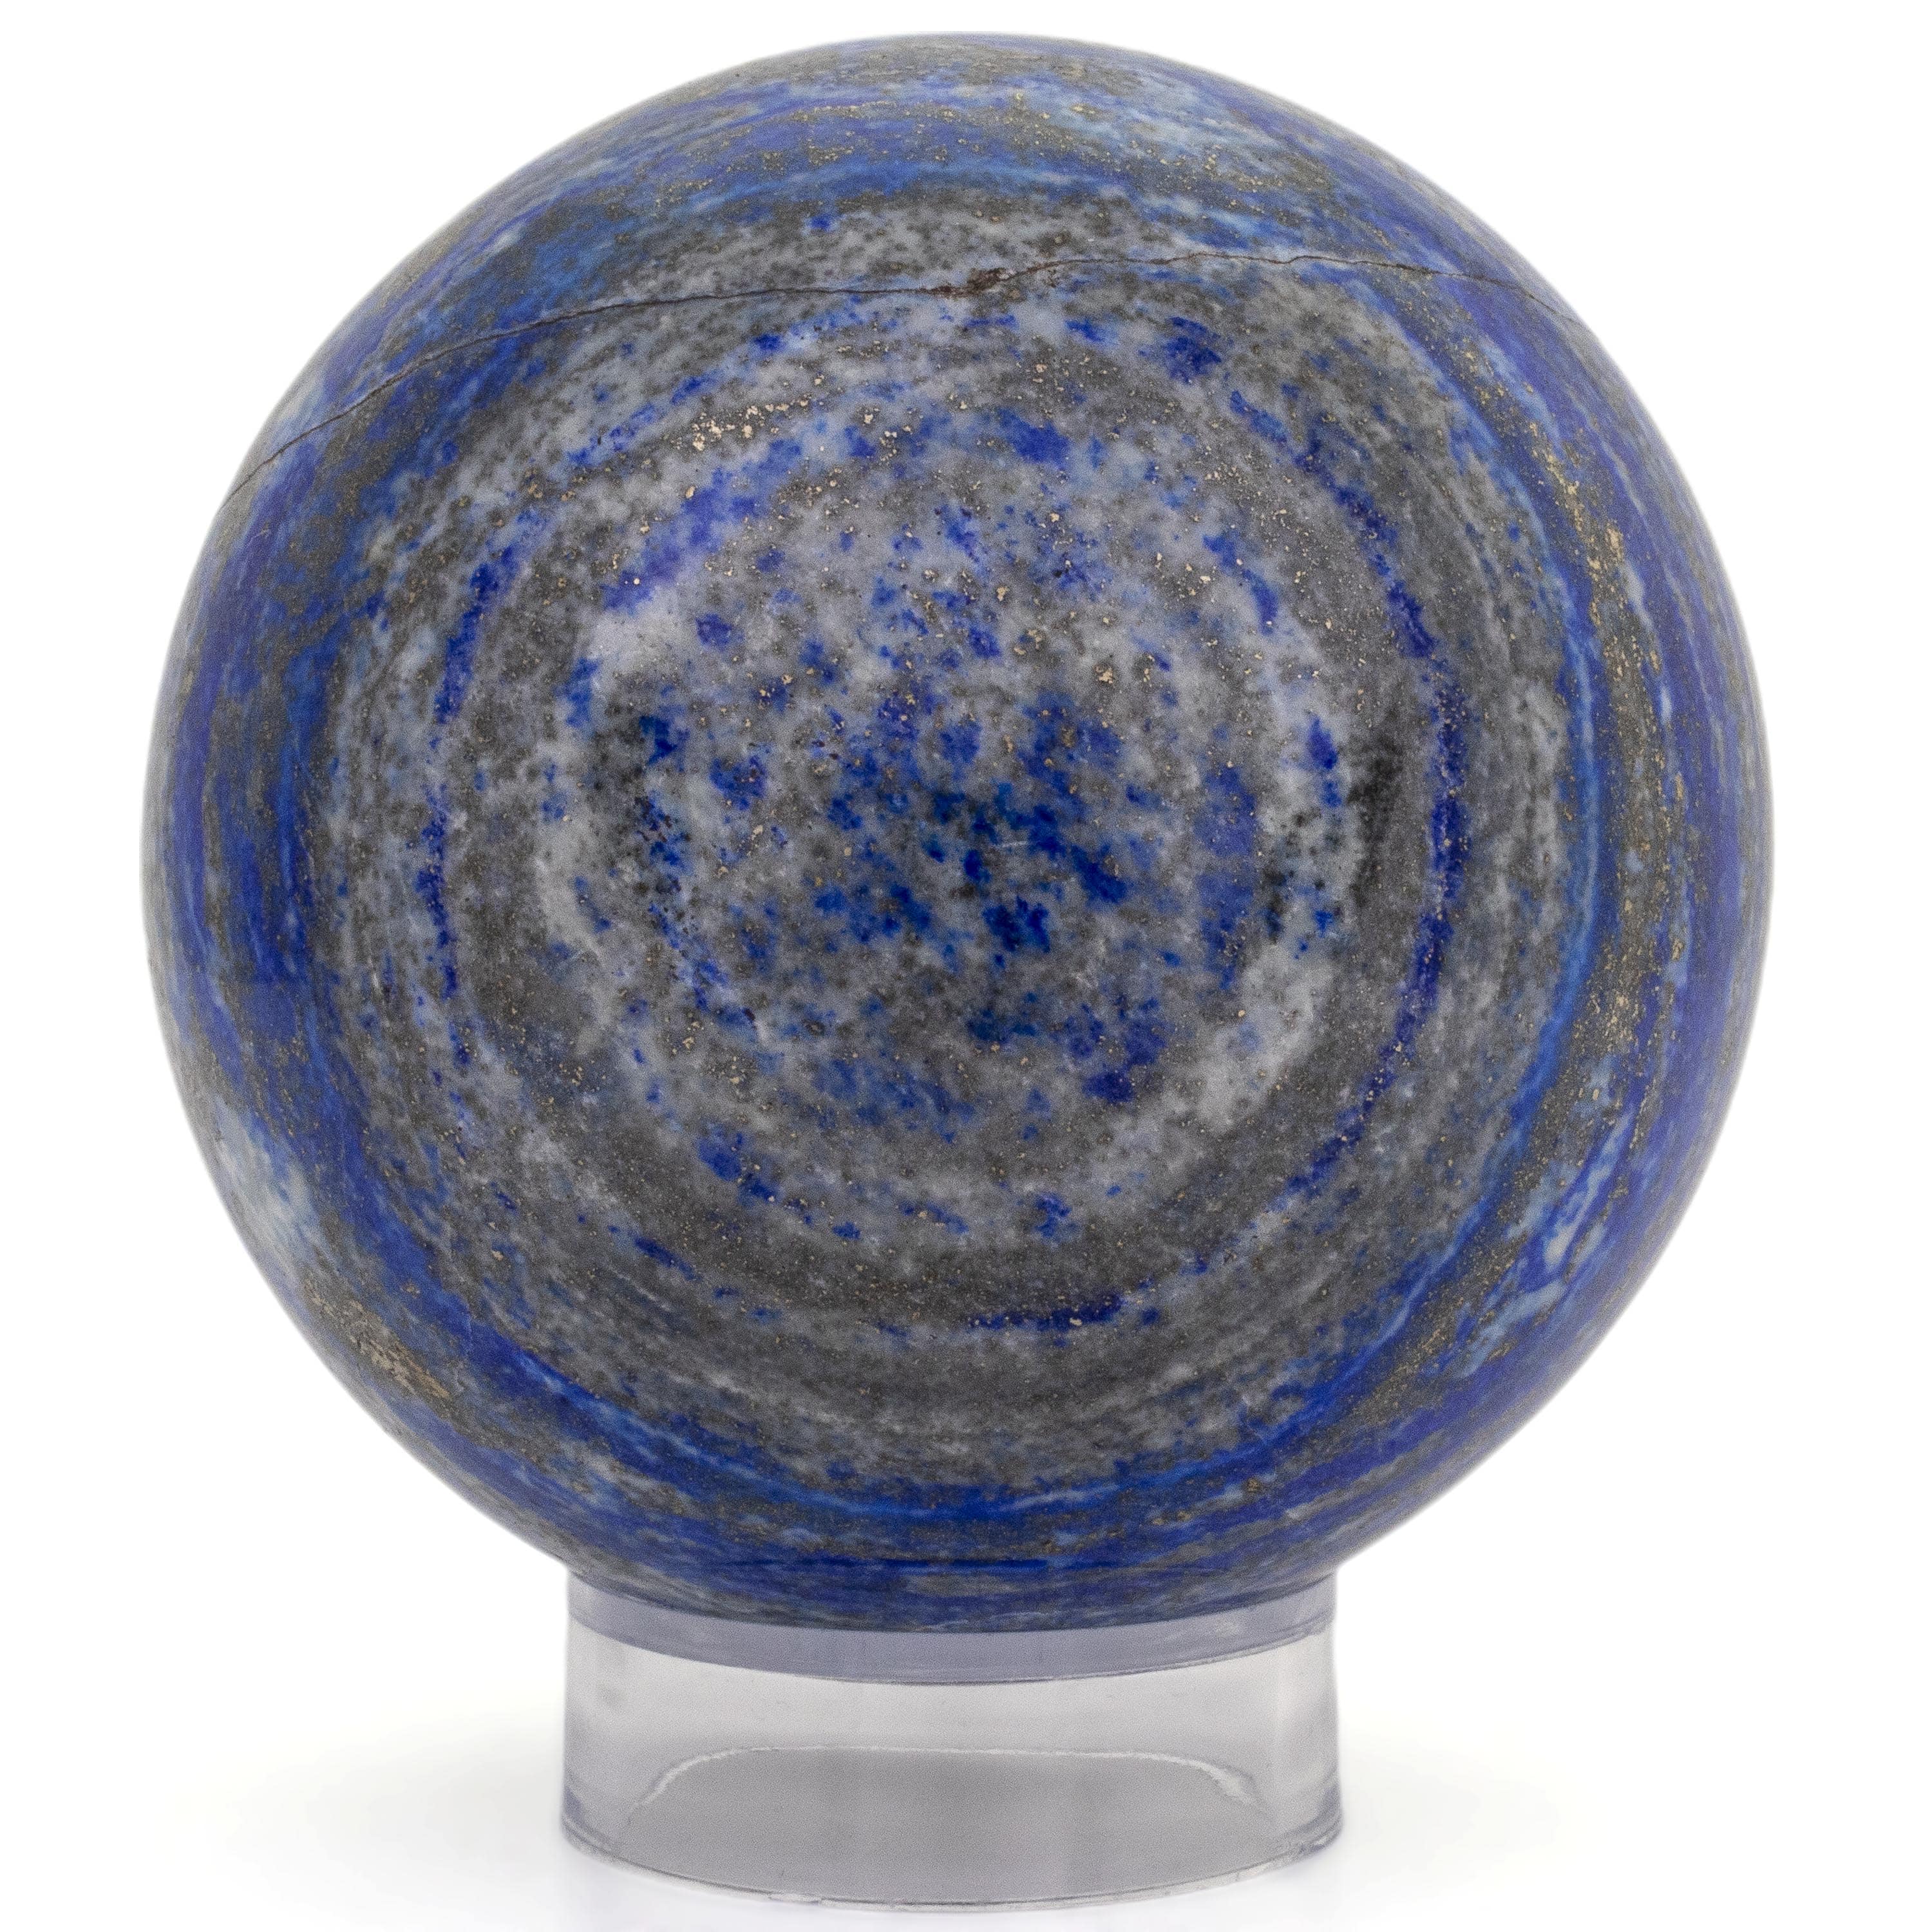 Kalifano Lapis Lapis Lazuli Sphere Carving 3.5 in. / 1,300 grams LPS1400.006